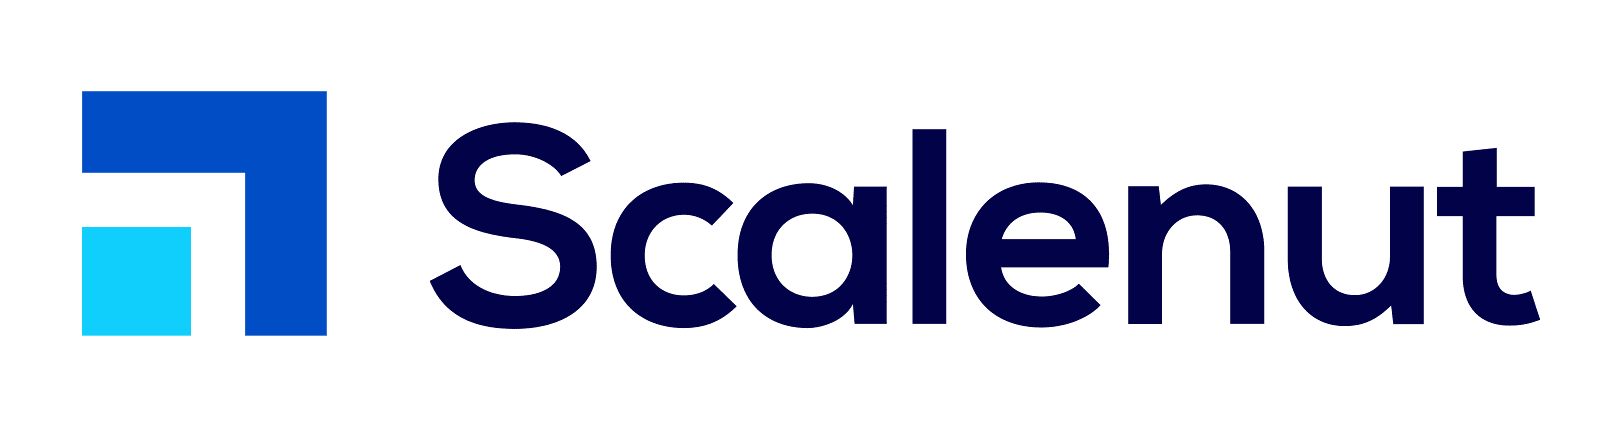 Scalenut - Crunchbase Company Profile & Funding